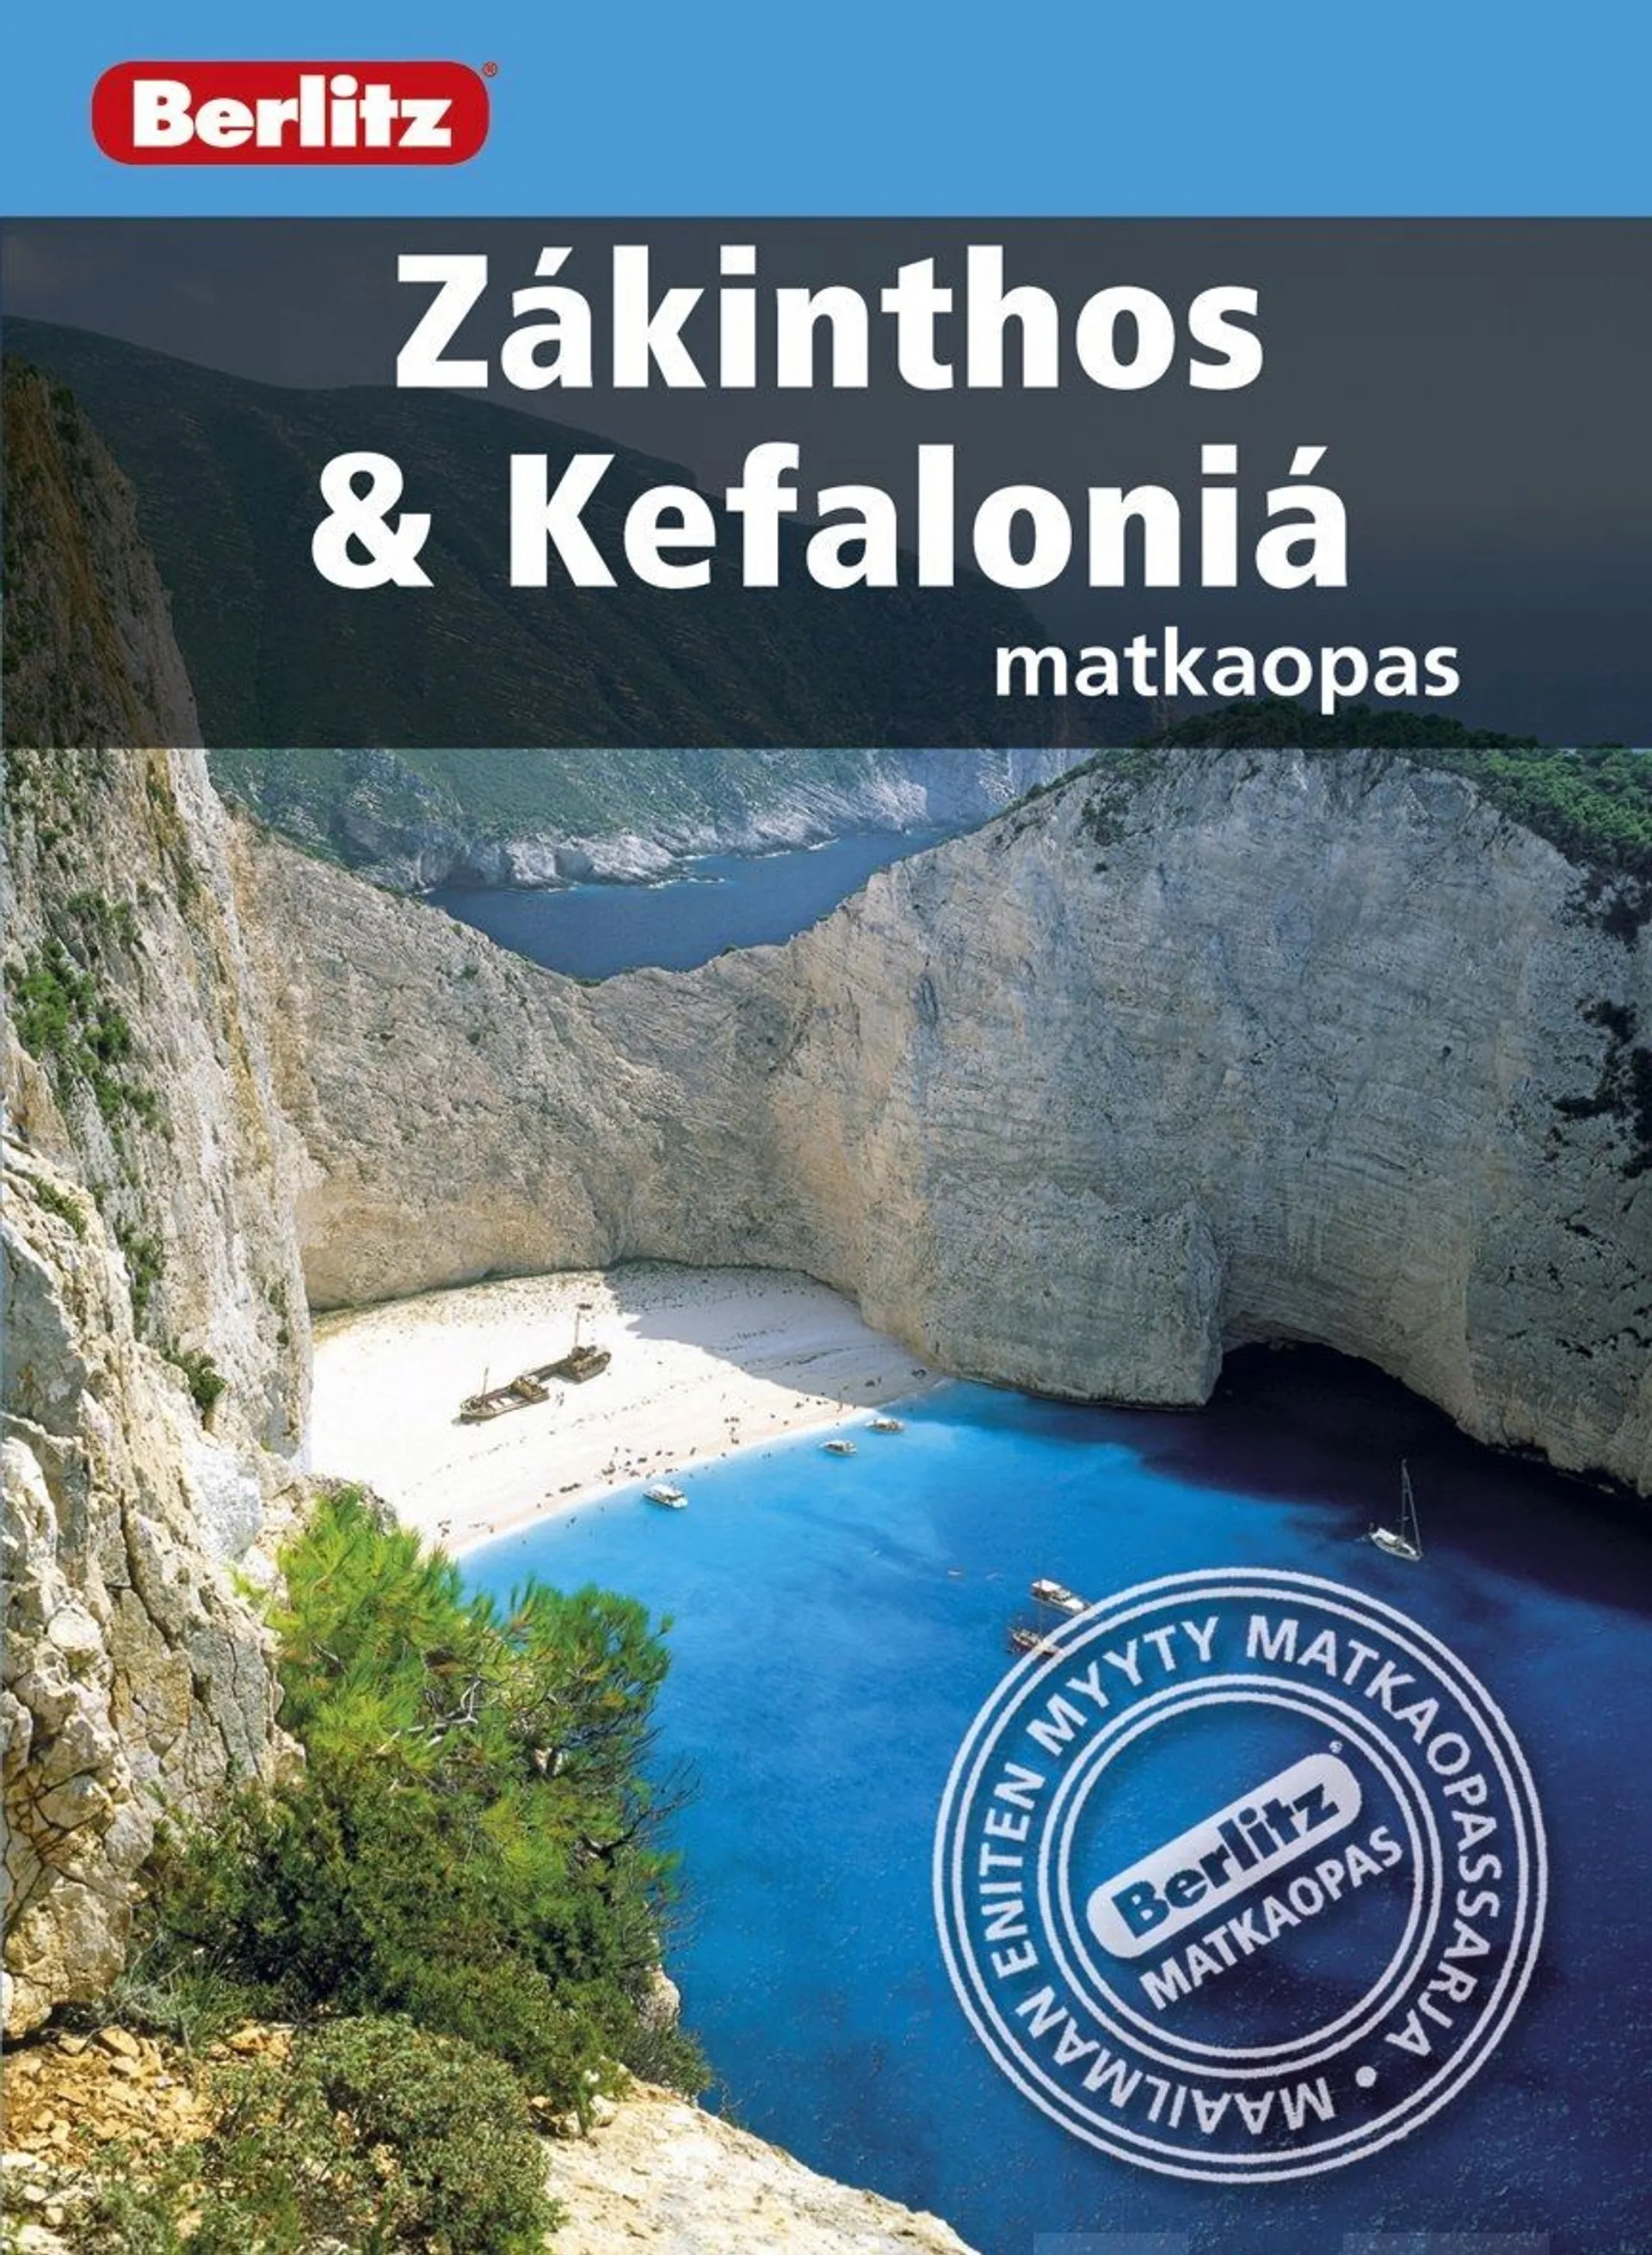 Zakinthos ja Kefalonia